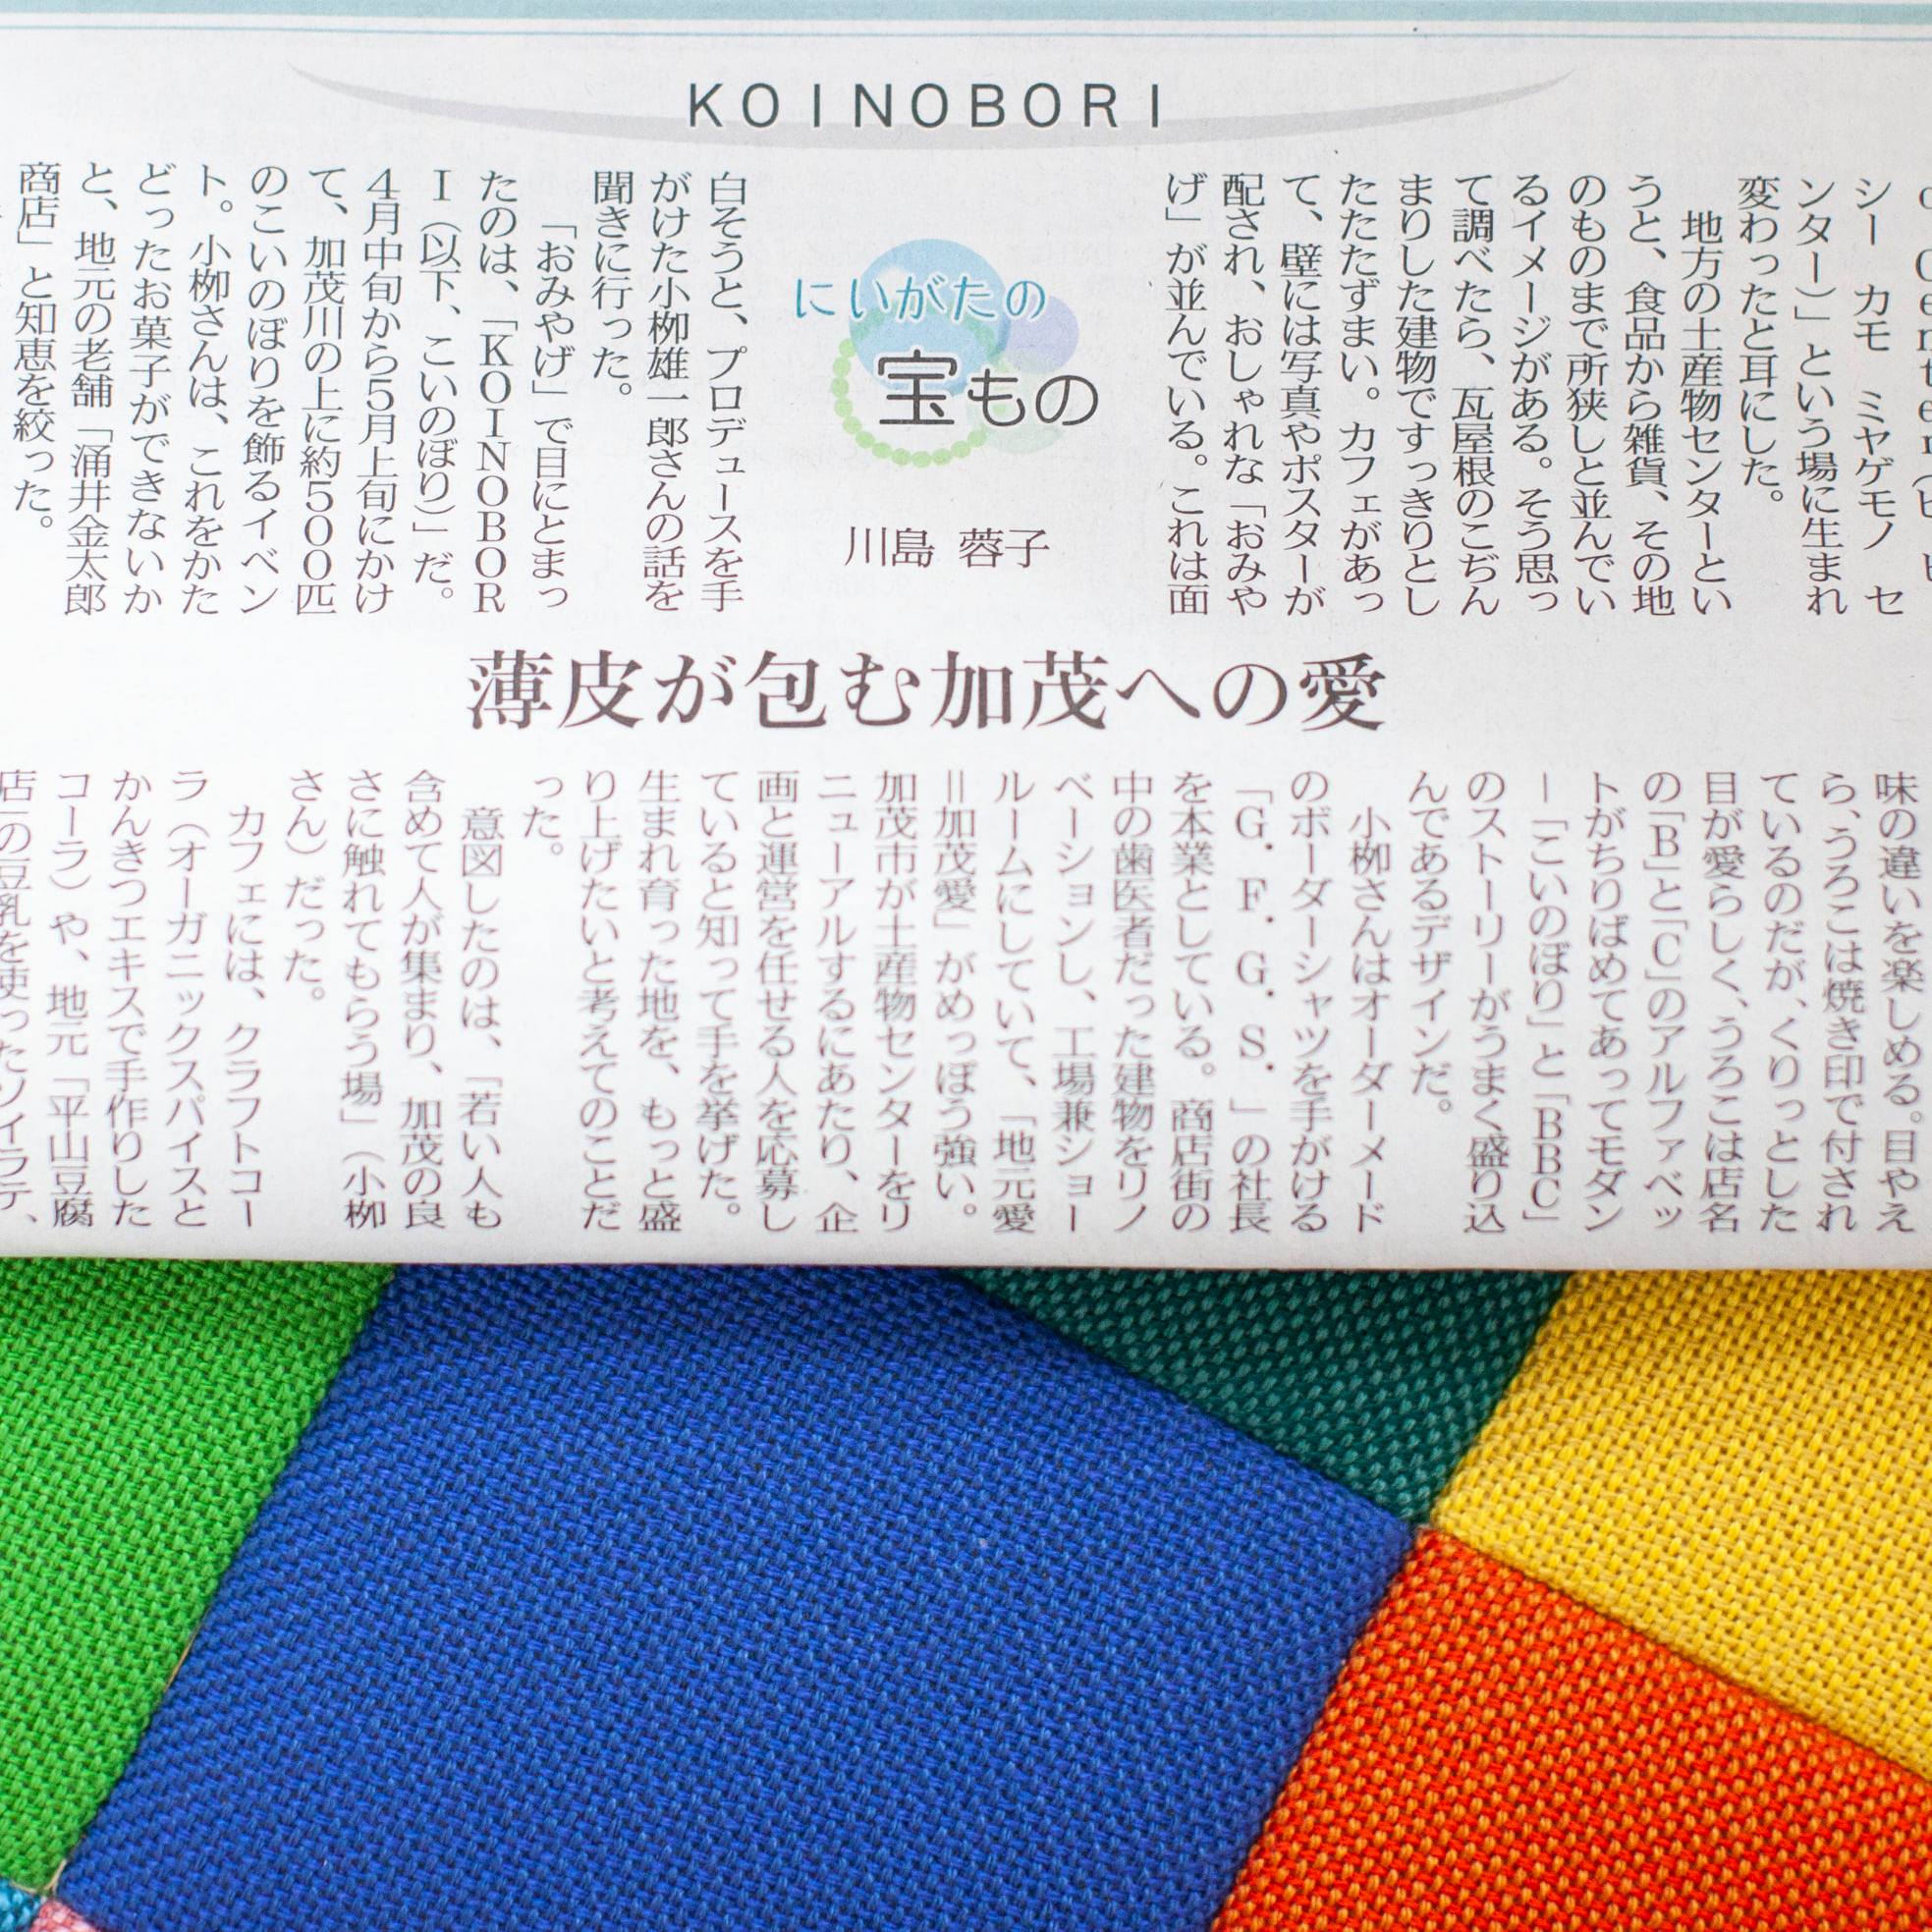 KOINOBORIを、新聞で紹介して頂きました。